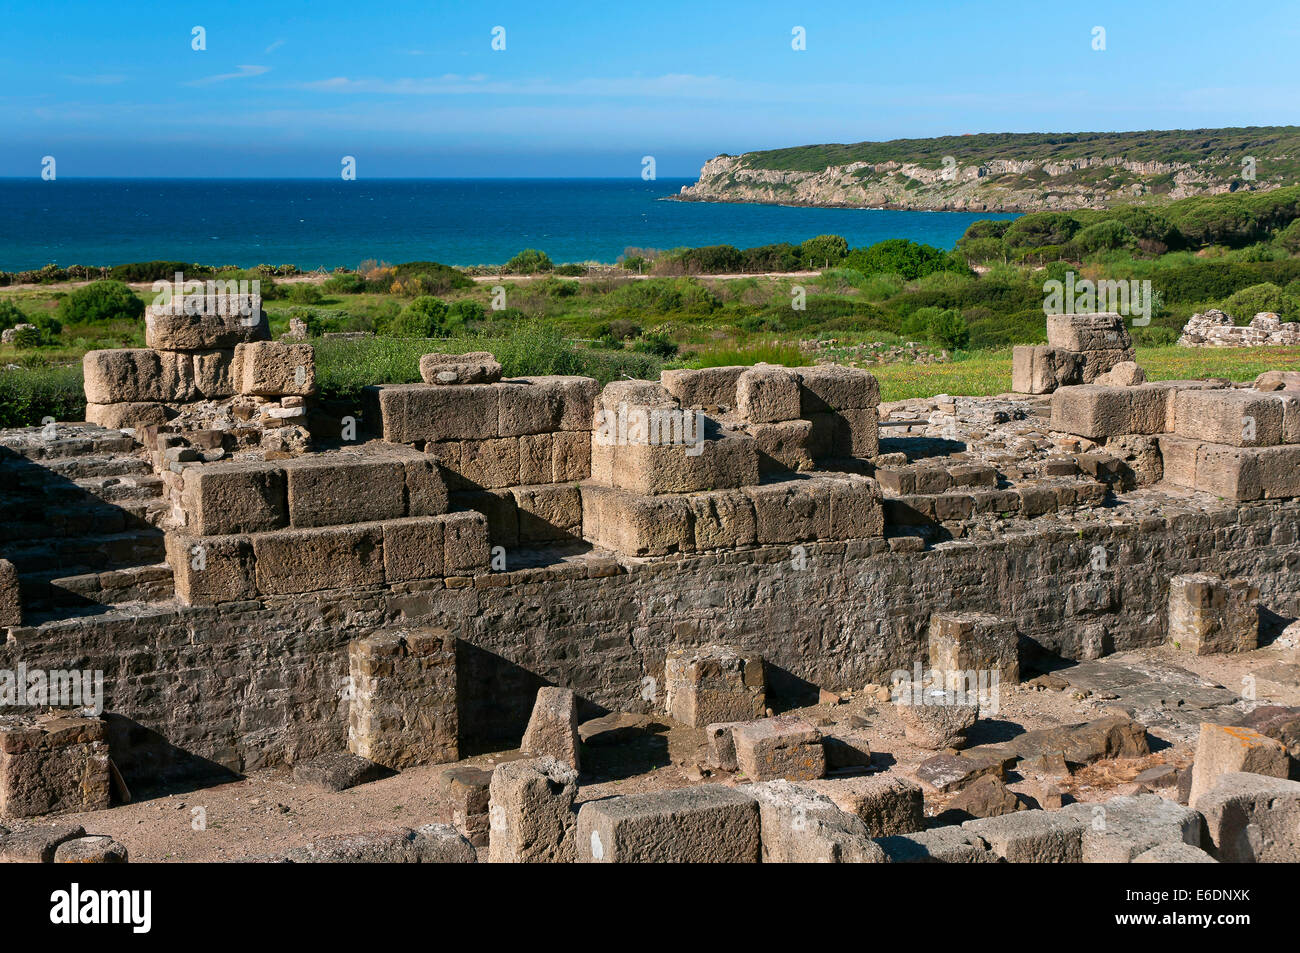 Roman ruins of Baelo Claudia -2th century BC, Tarifa, Cadiz province, Region of Andalusia, Spain, Europe Stock Photo